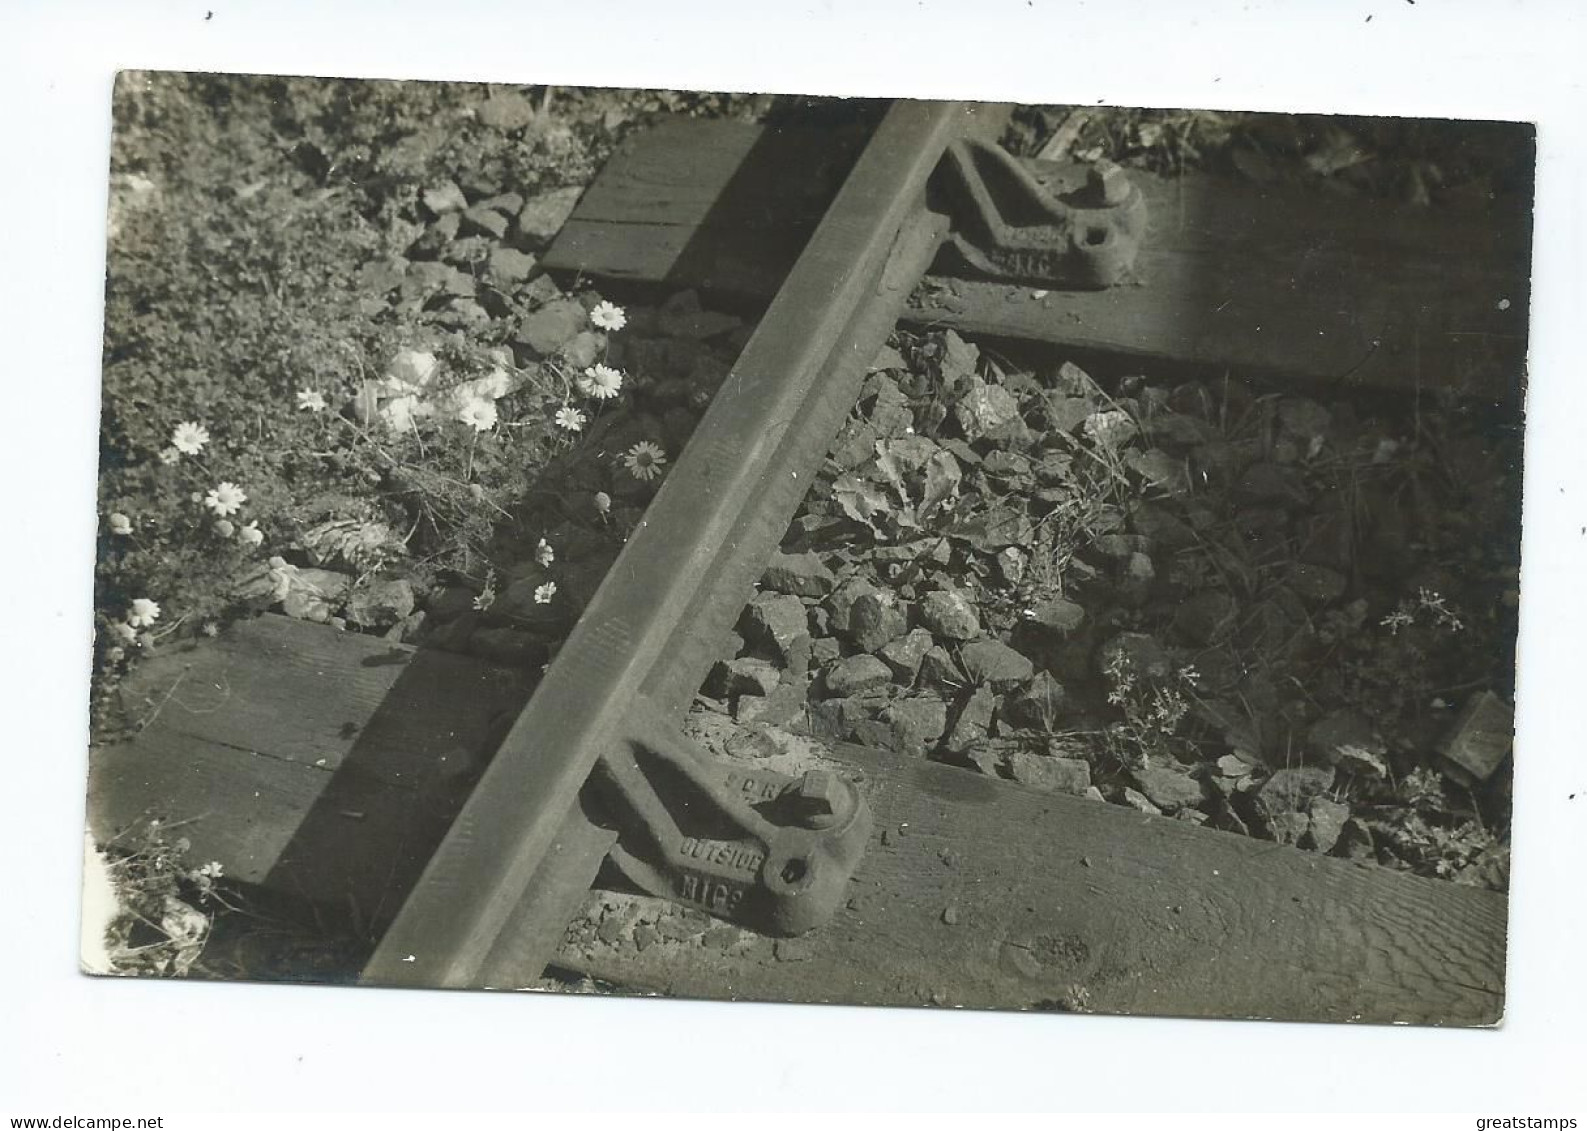 Postcard   Railway Track And Chair Detail Rp Unknown Origin - Equipment